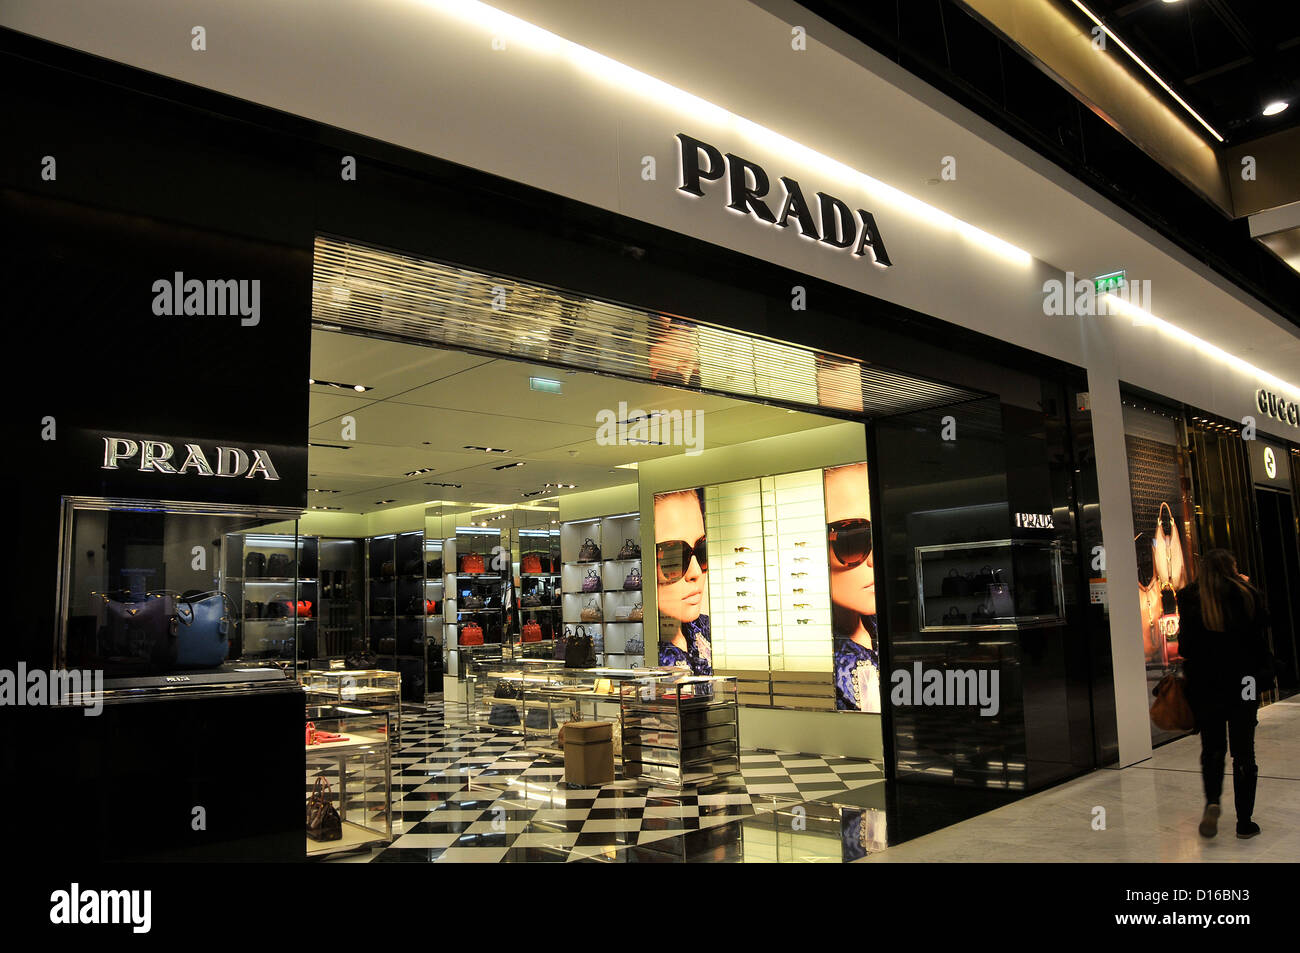 Prada store, Roissy airport, Paris, France Stock Photo - Alamy